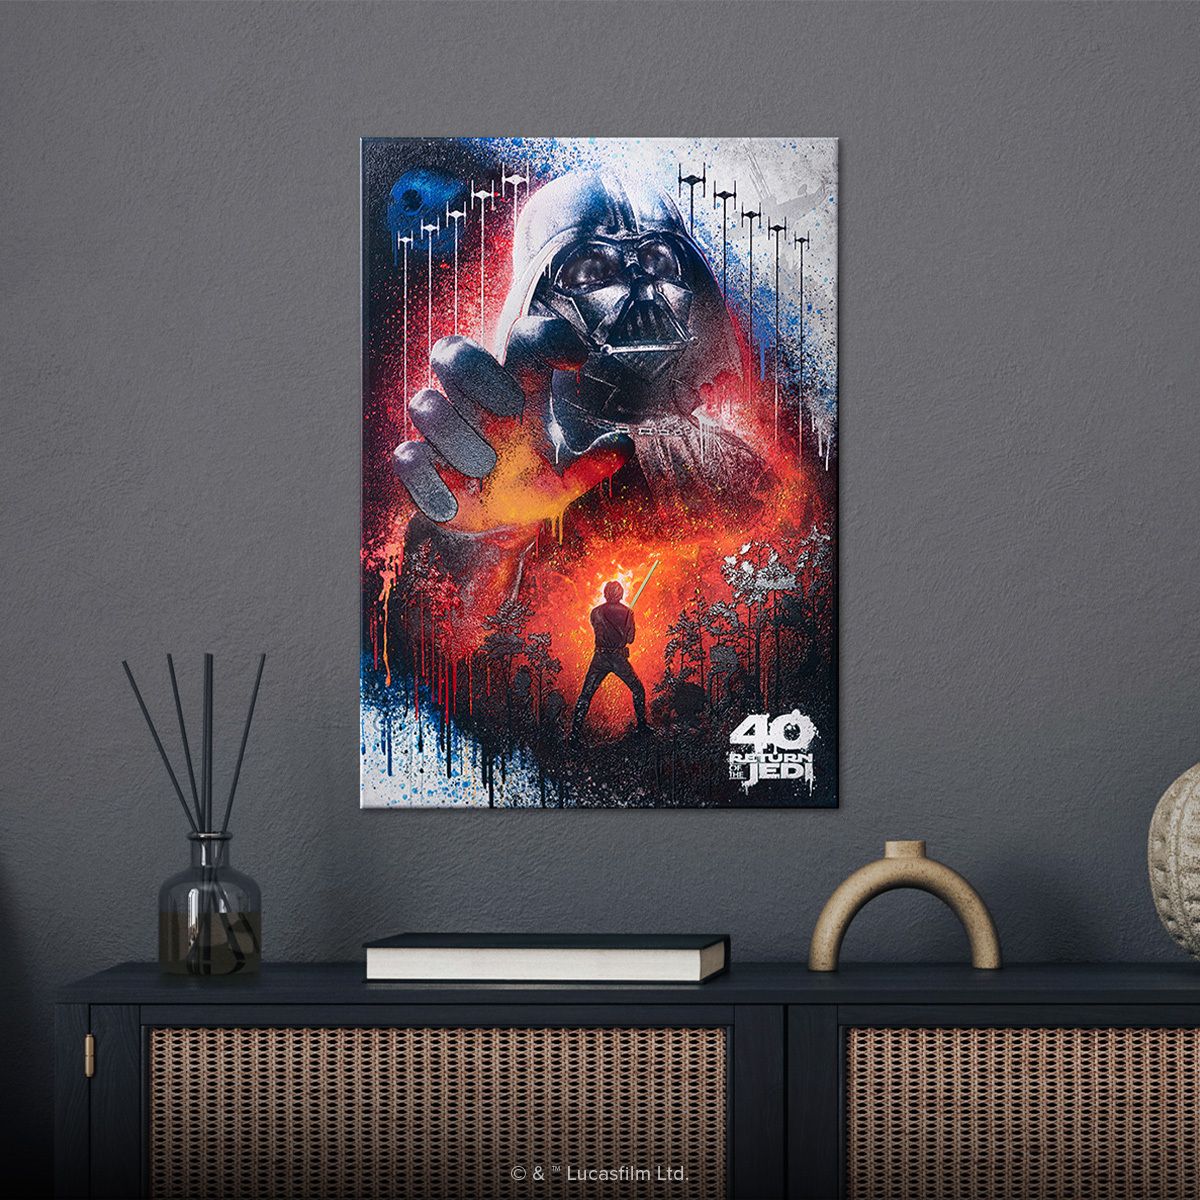 Return Of The Jedi™ Poster Print